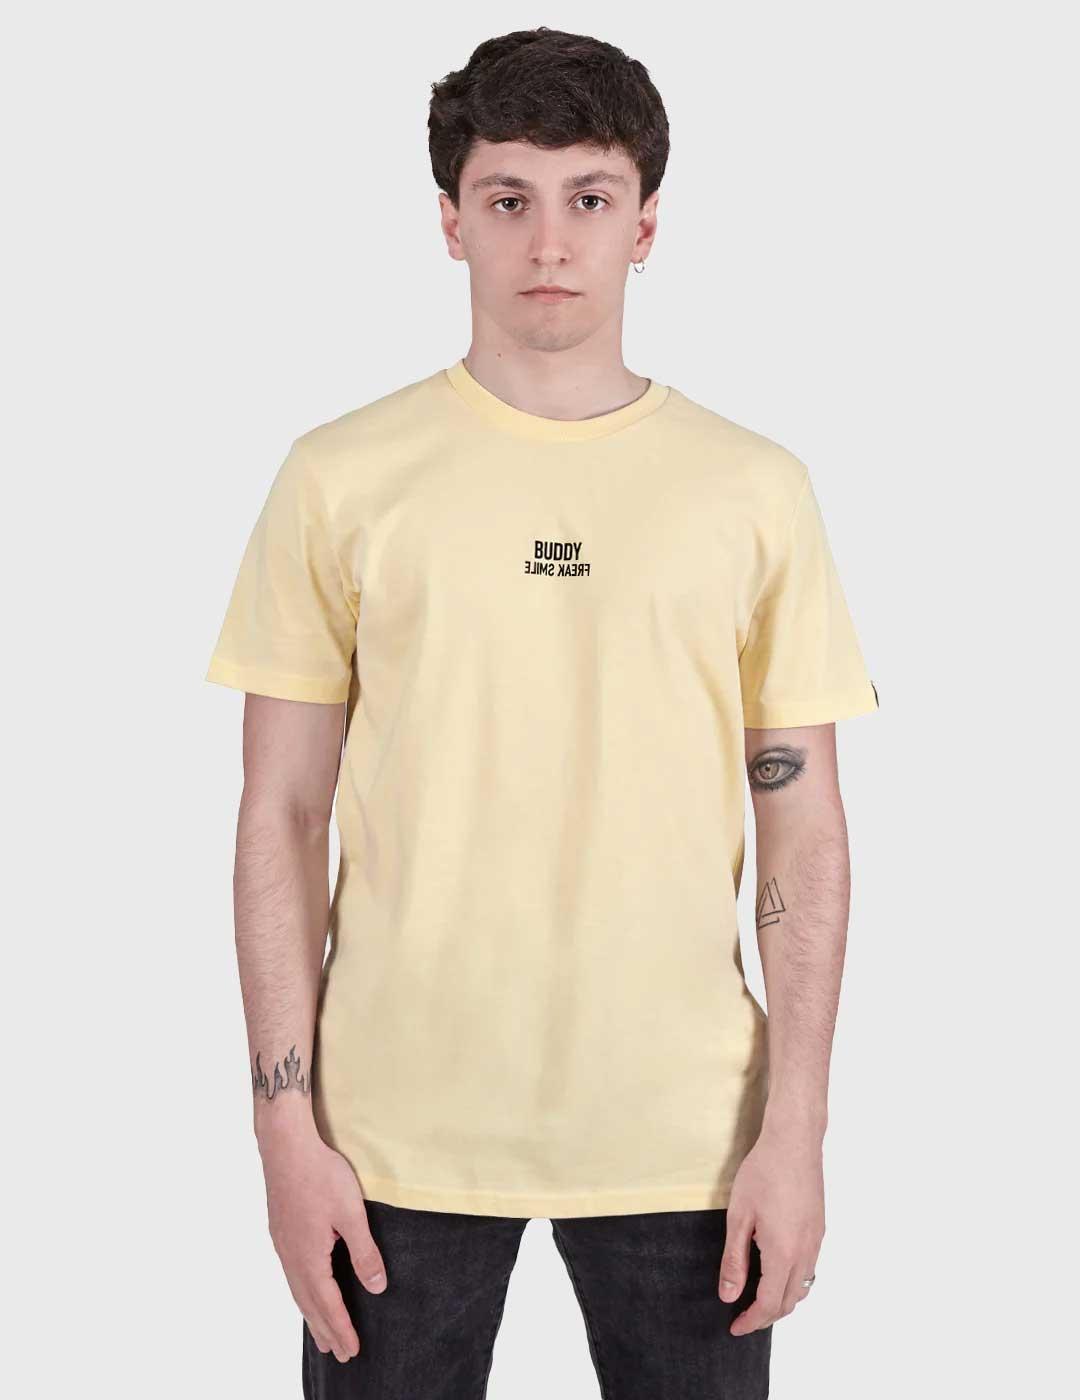 Buddy Bamboo Camiseta amarilla para hombre